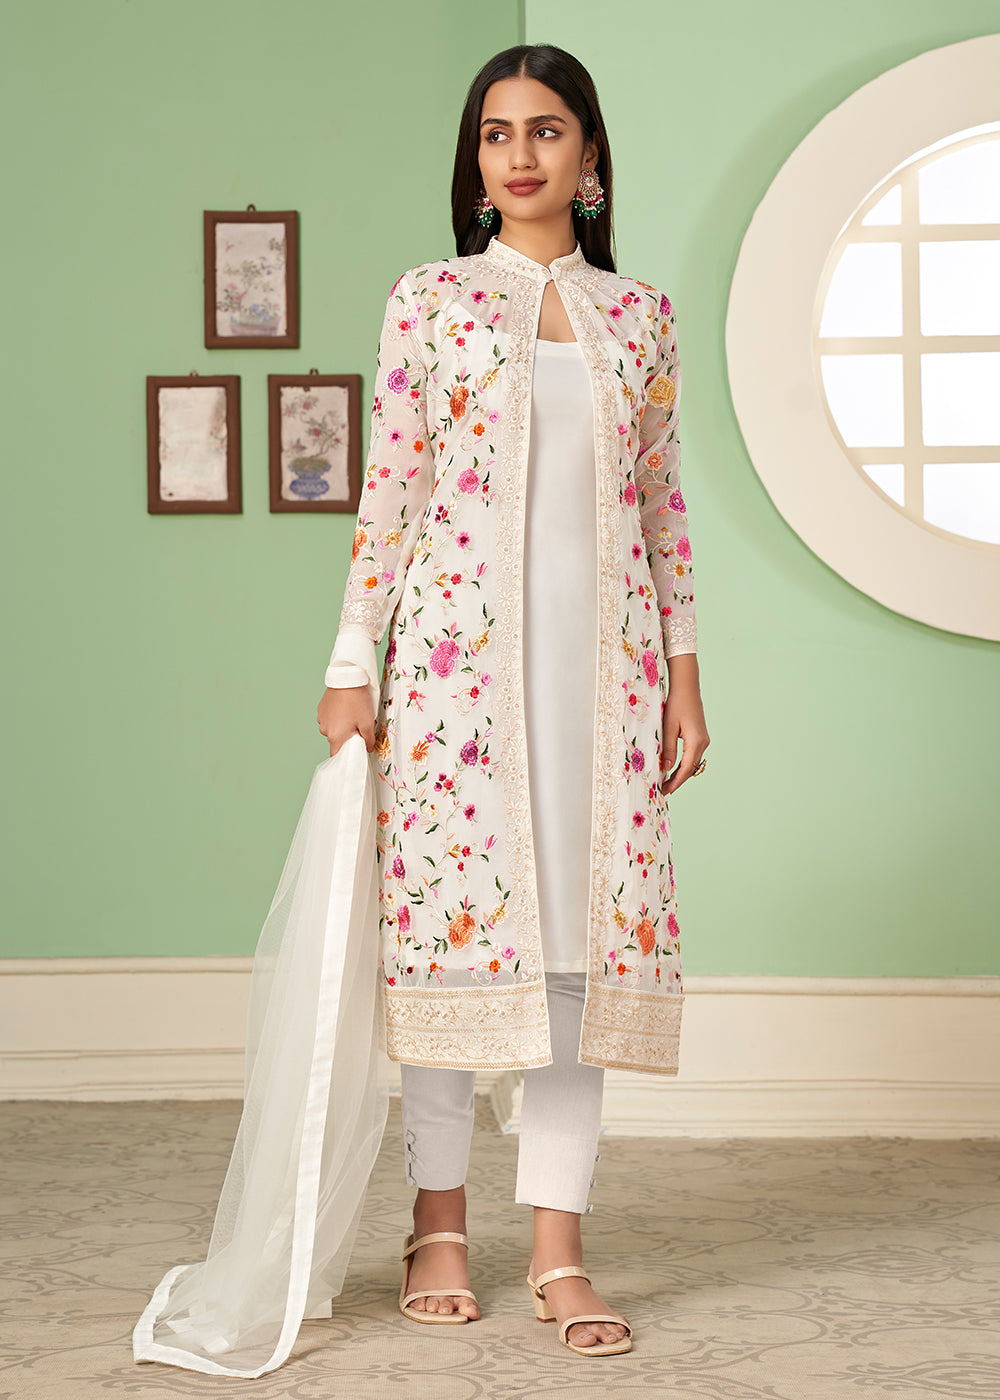 Pakistani Wedding Dresses, Indian dress, White Chiffon Collection 2020  Latest Style Salwar Kameez Made to Order